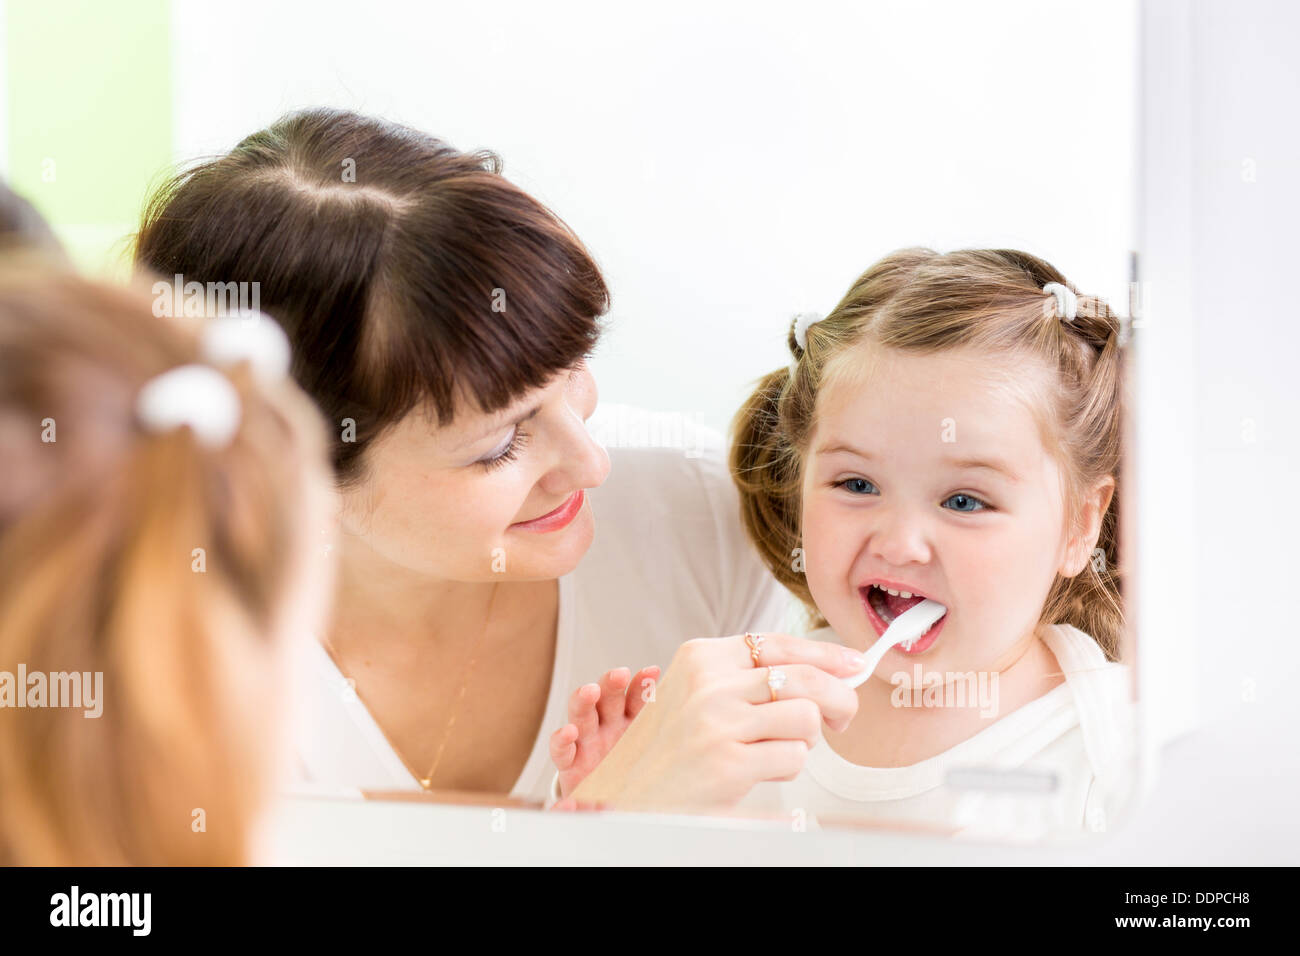 mother brushing teeth her kid Stock Photo